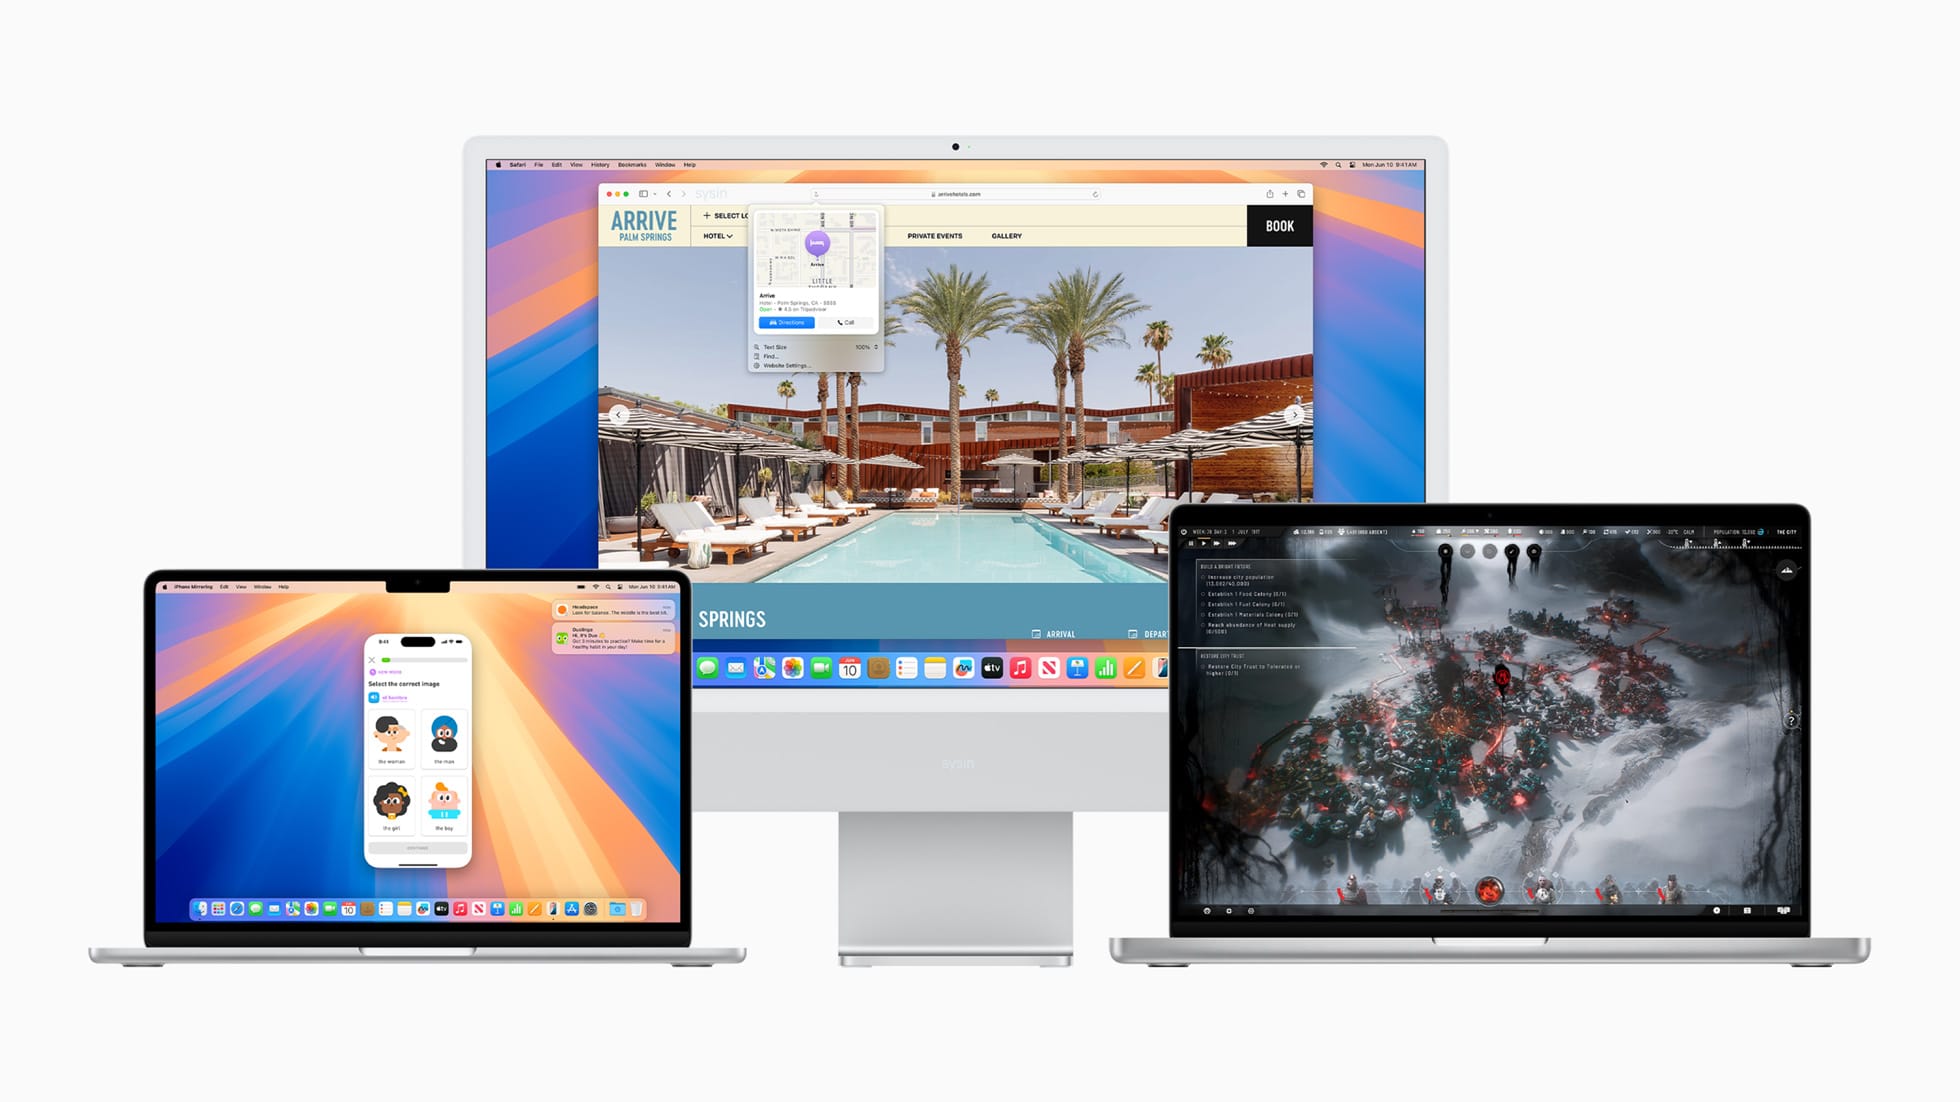 MacBook Pro 展示 iPhone 镜像、Mac 展示 Safari 浏览器中的 Highlights、以及另一台 MacBook Pro 展示沉浸式游戏体验。